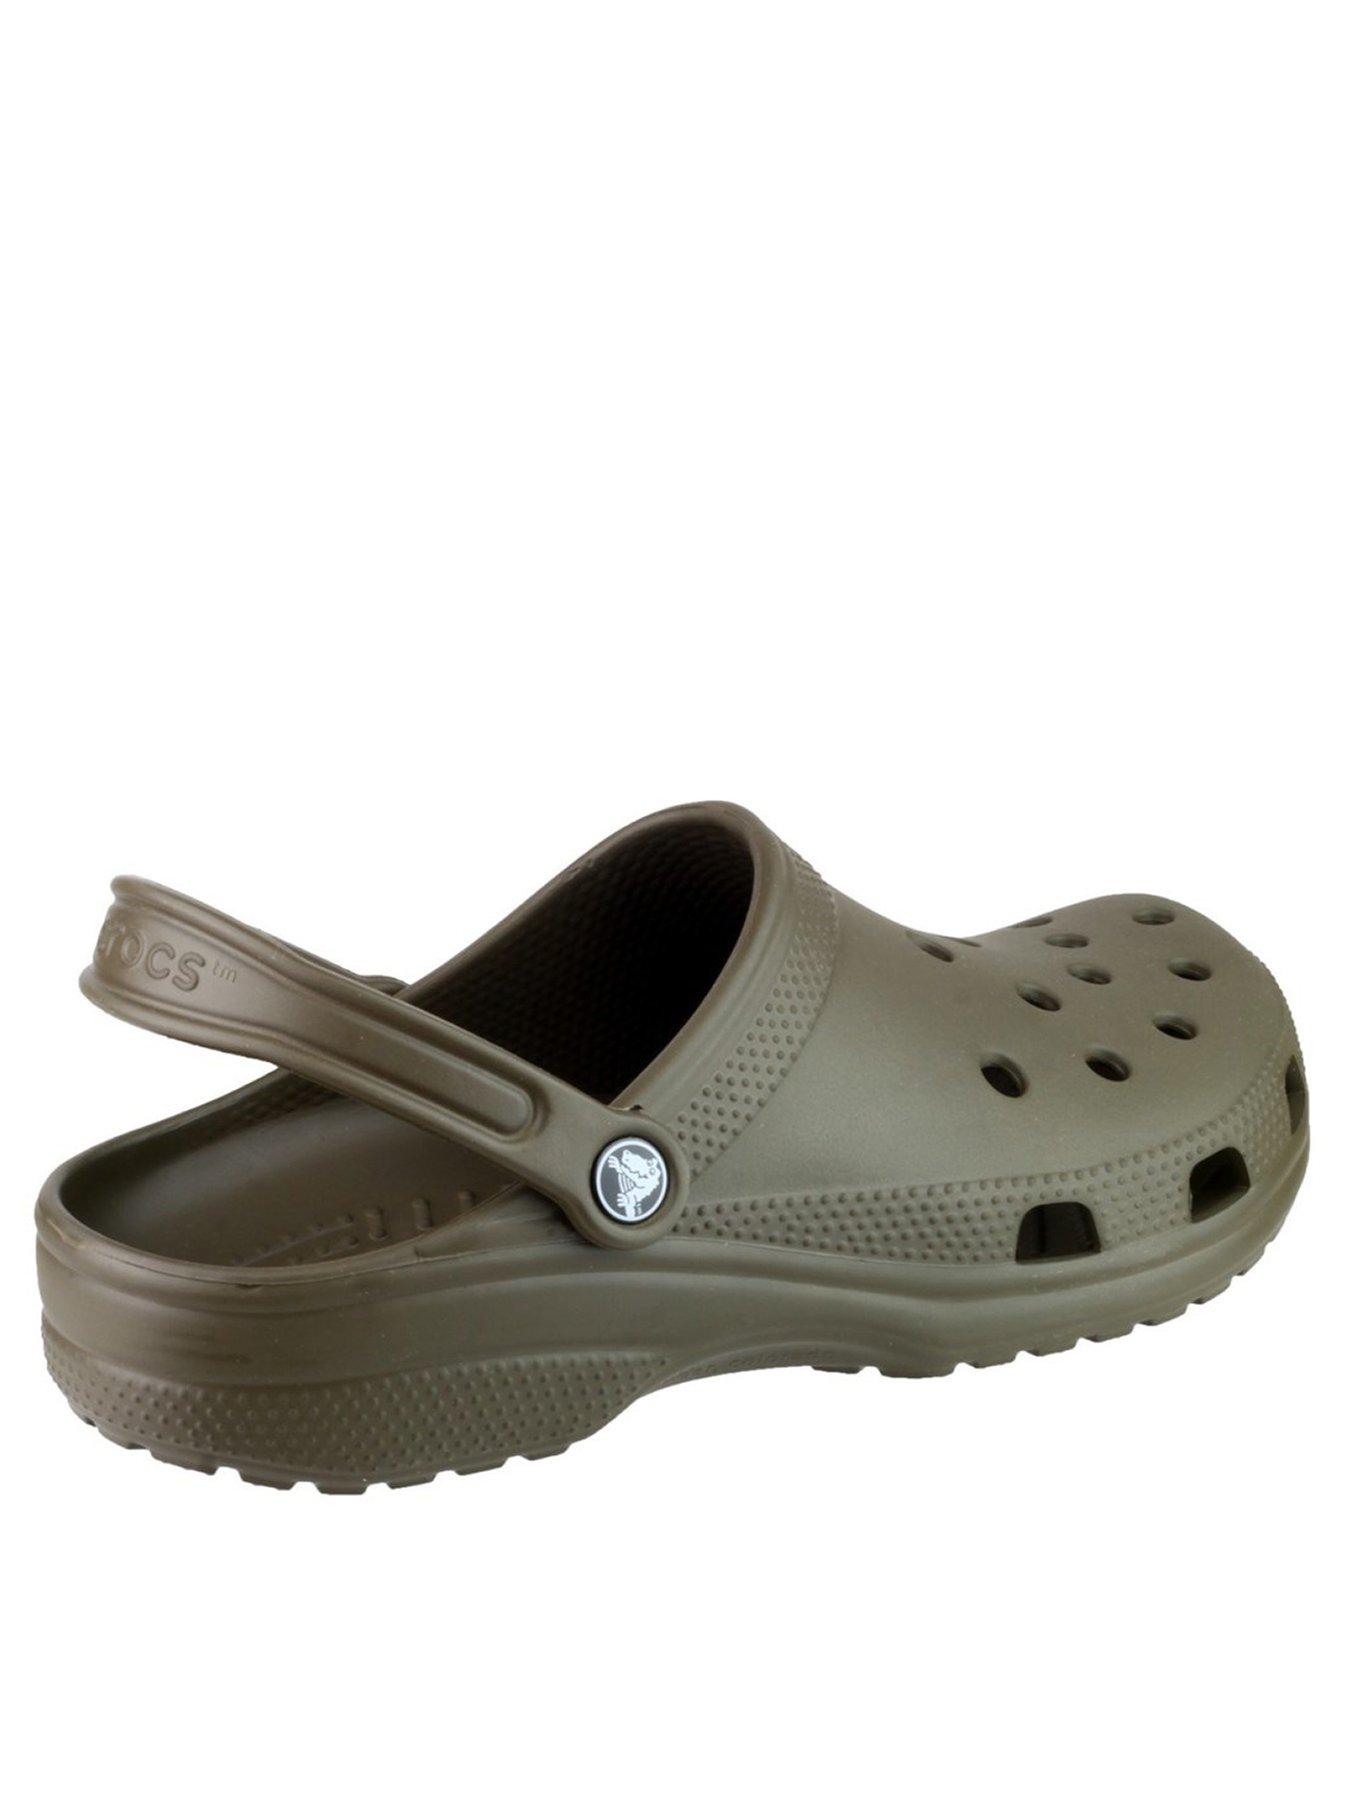 Crocs Classic Clogs - Brown 